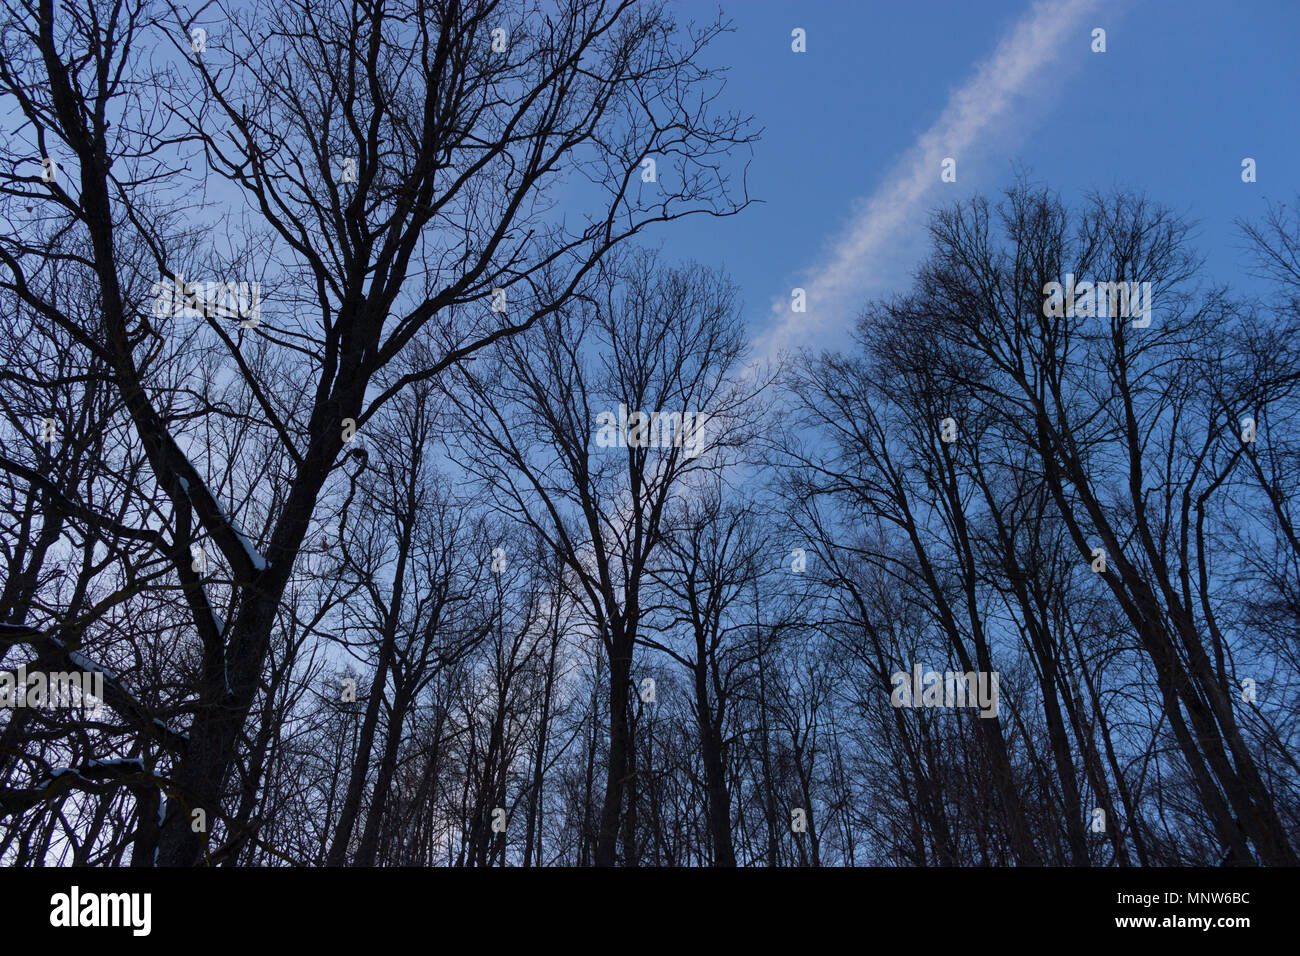 Dark Night Forest With Blue Sky Background Stock Photo Alamy